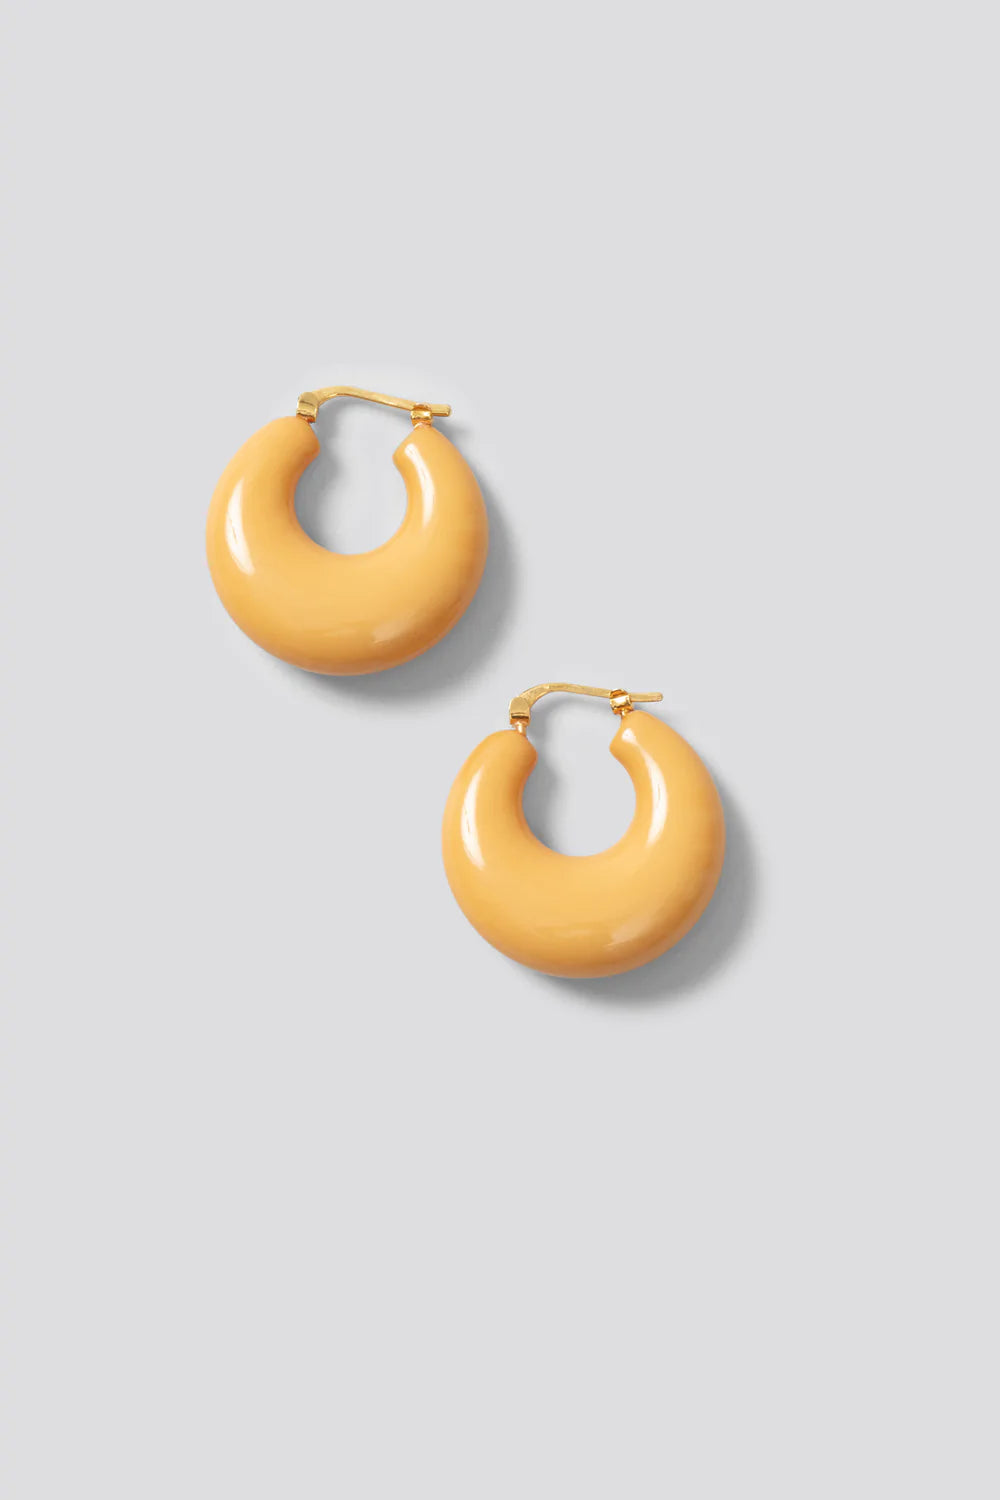 Rachel Comey- Grass Earrings: Yellow